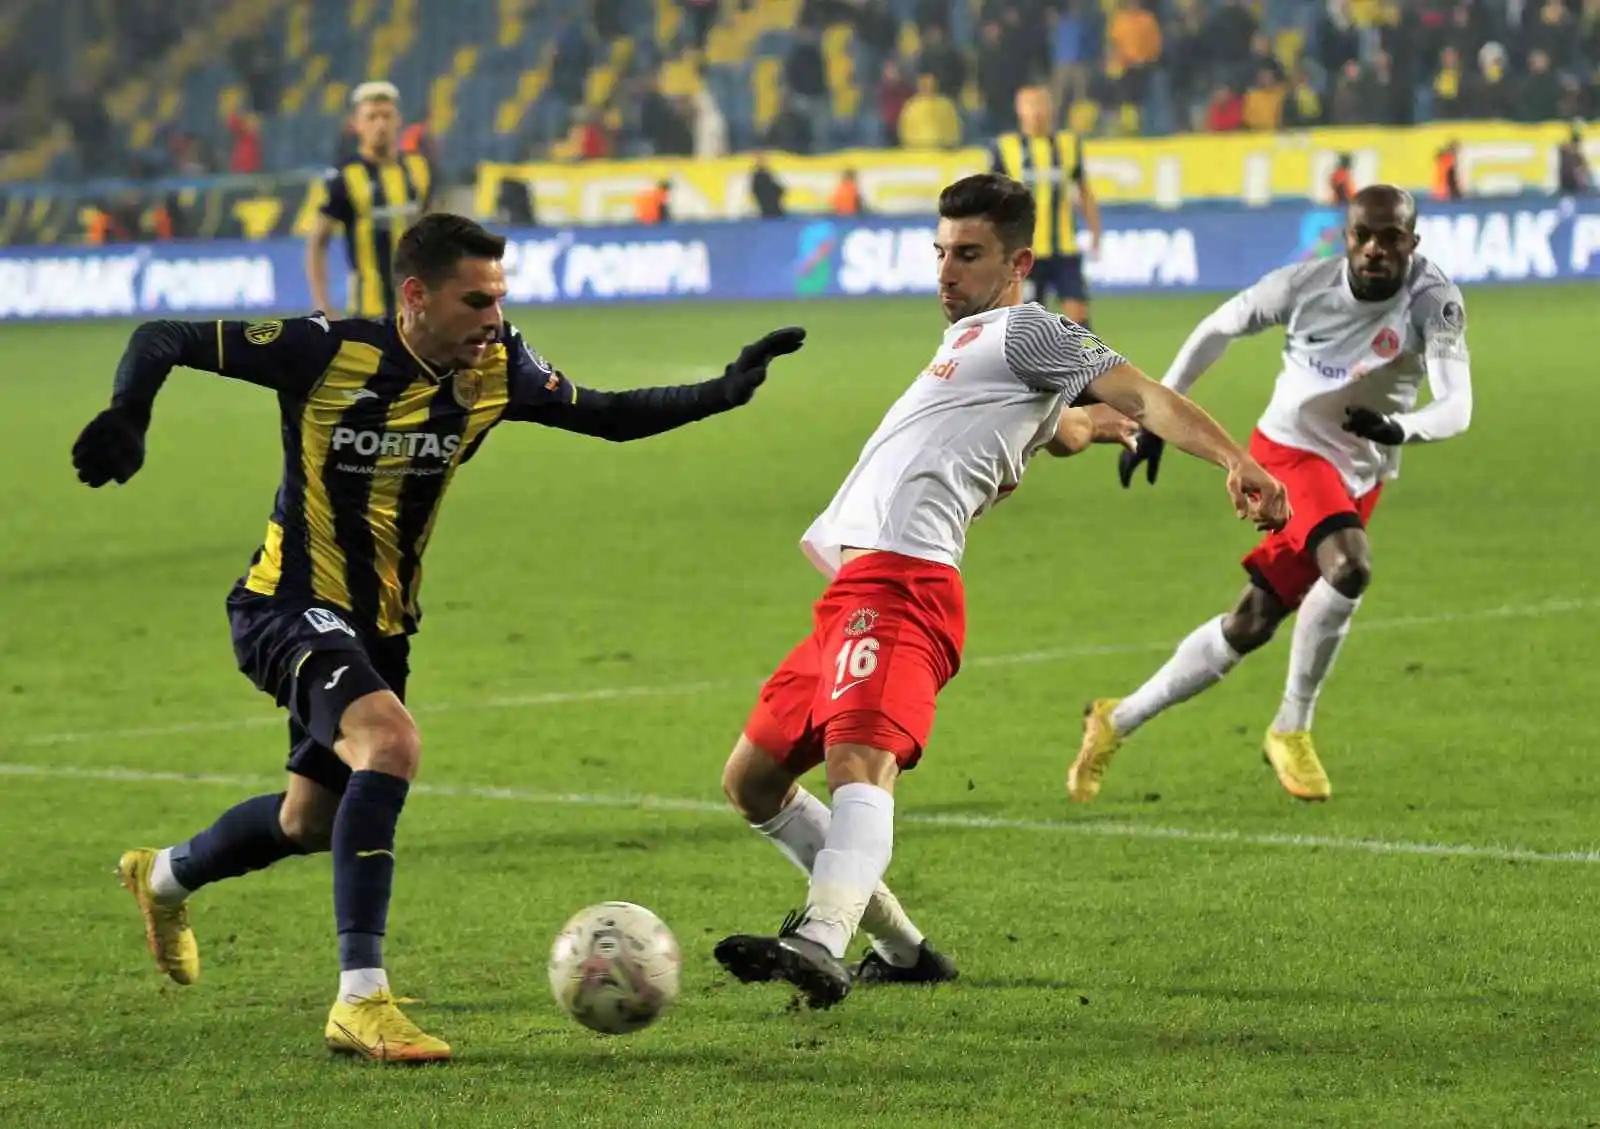 Spor Toto Süper Lig: Ankaragücü: 1 - Ümraniyespor : 2 (Maç sonucu)
